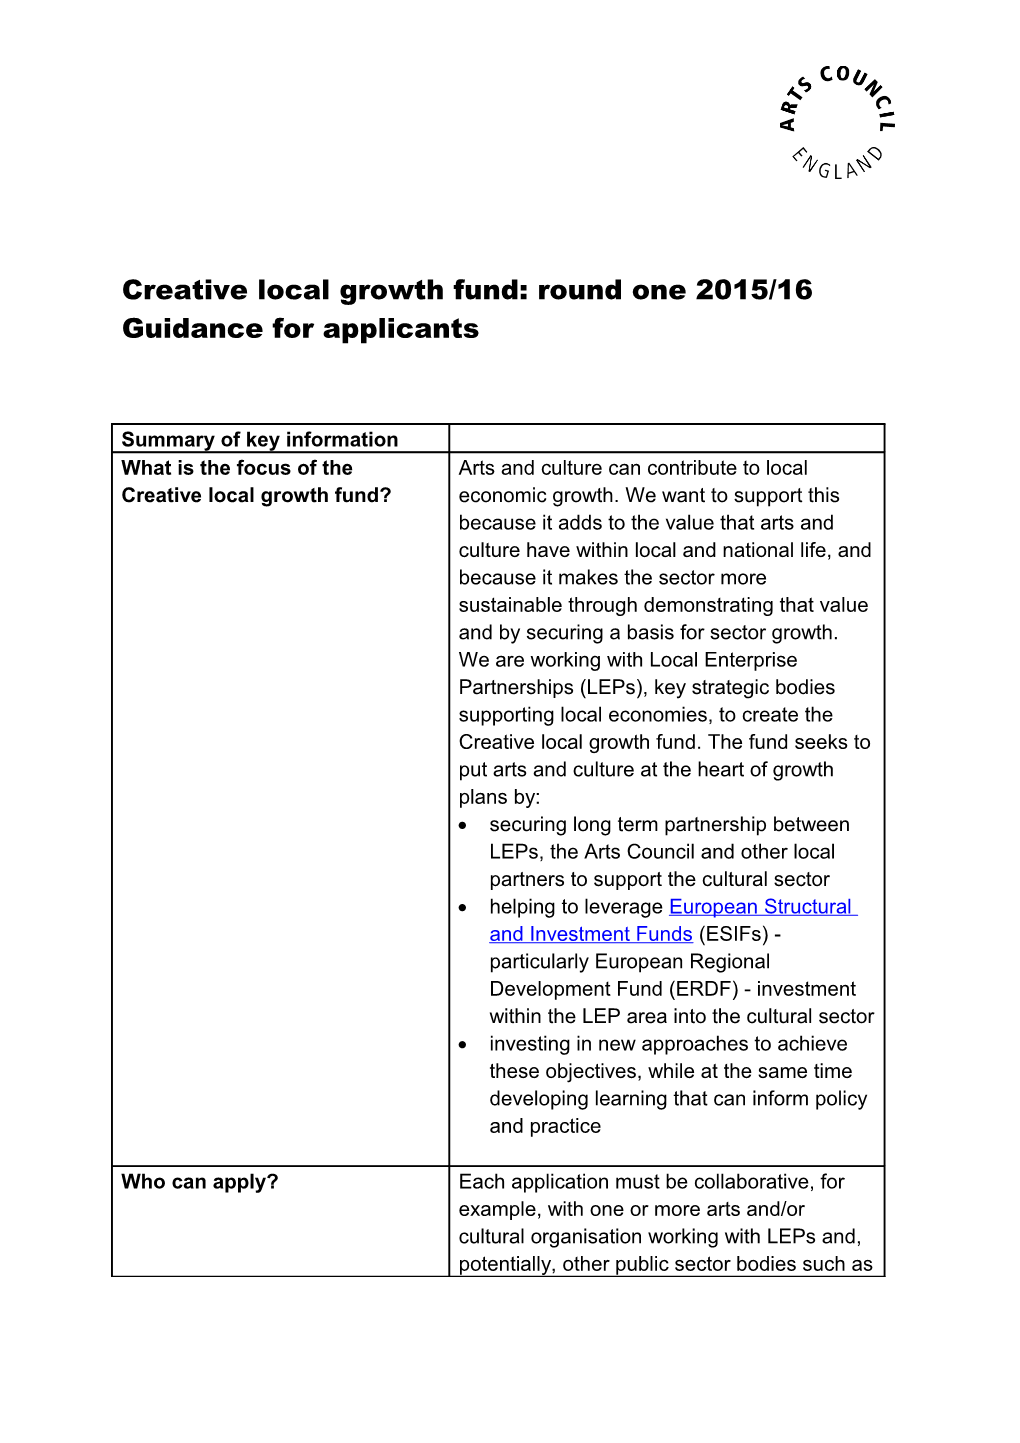 Creative Local Growth Fund: Round One 2015/16